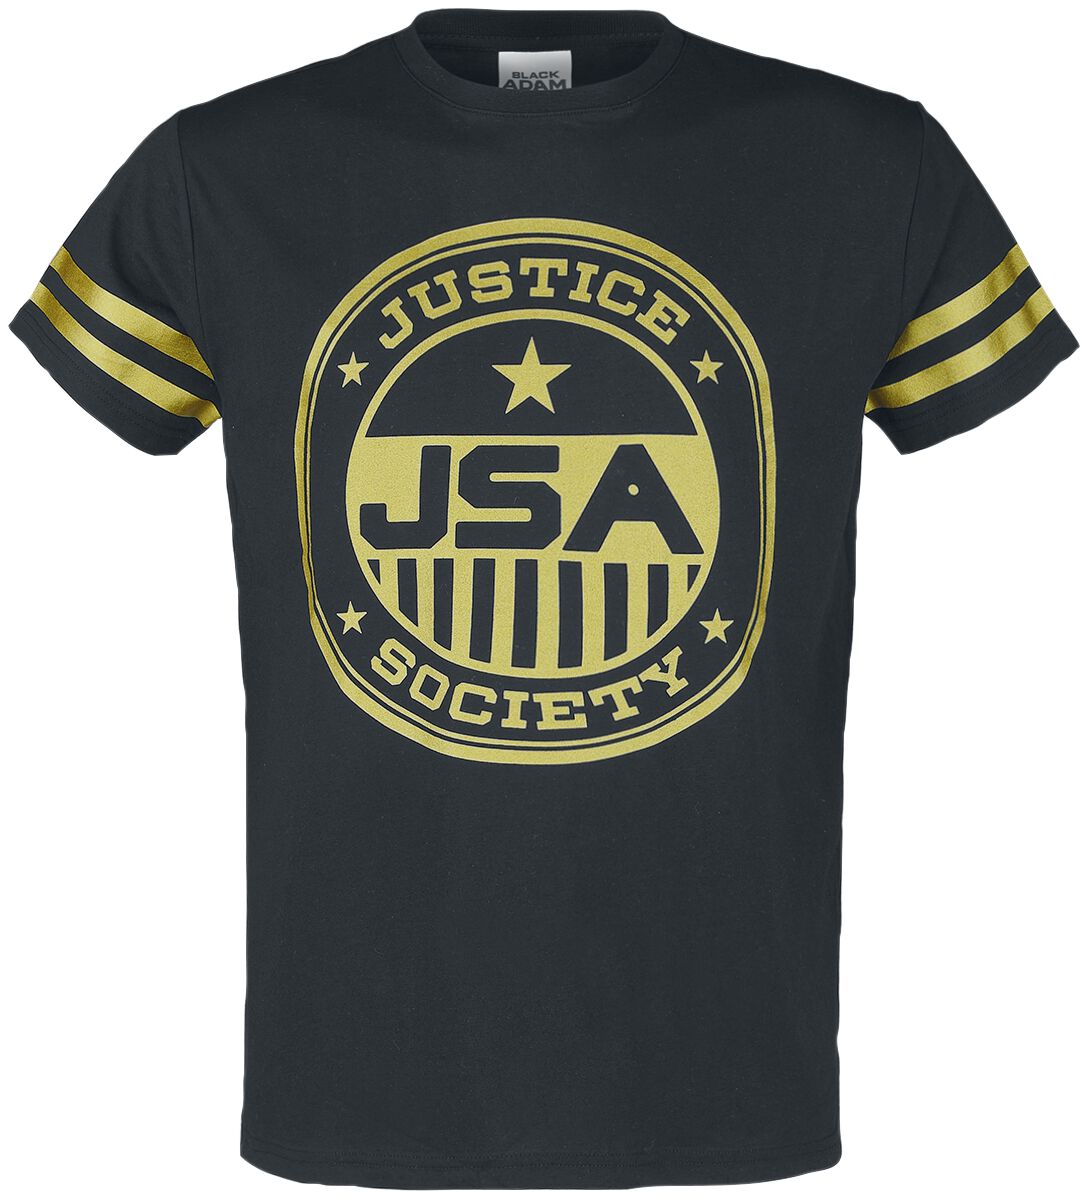 black adam - dc comics t-shirt - jsa justice society - s bis m - fÃ¼r mÃ¤nner - grÃ¶ÃŸe s - - emp exklusives merchandise! schwarz